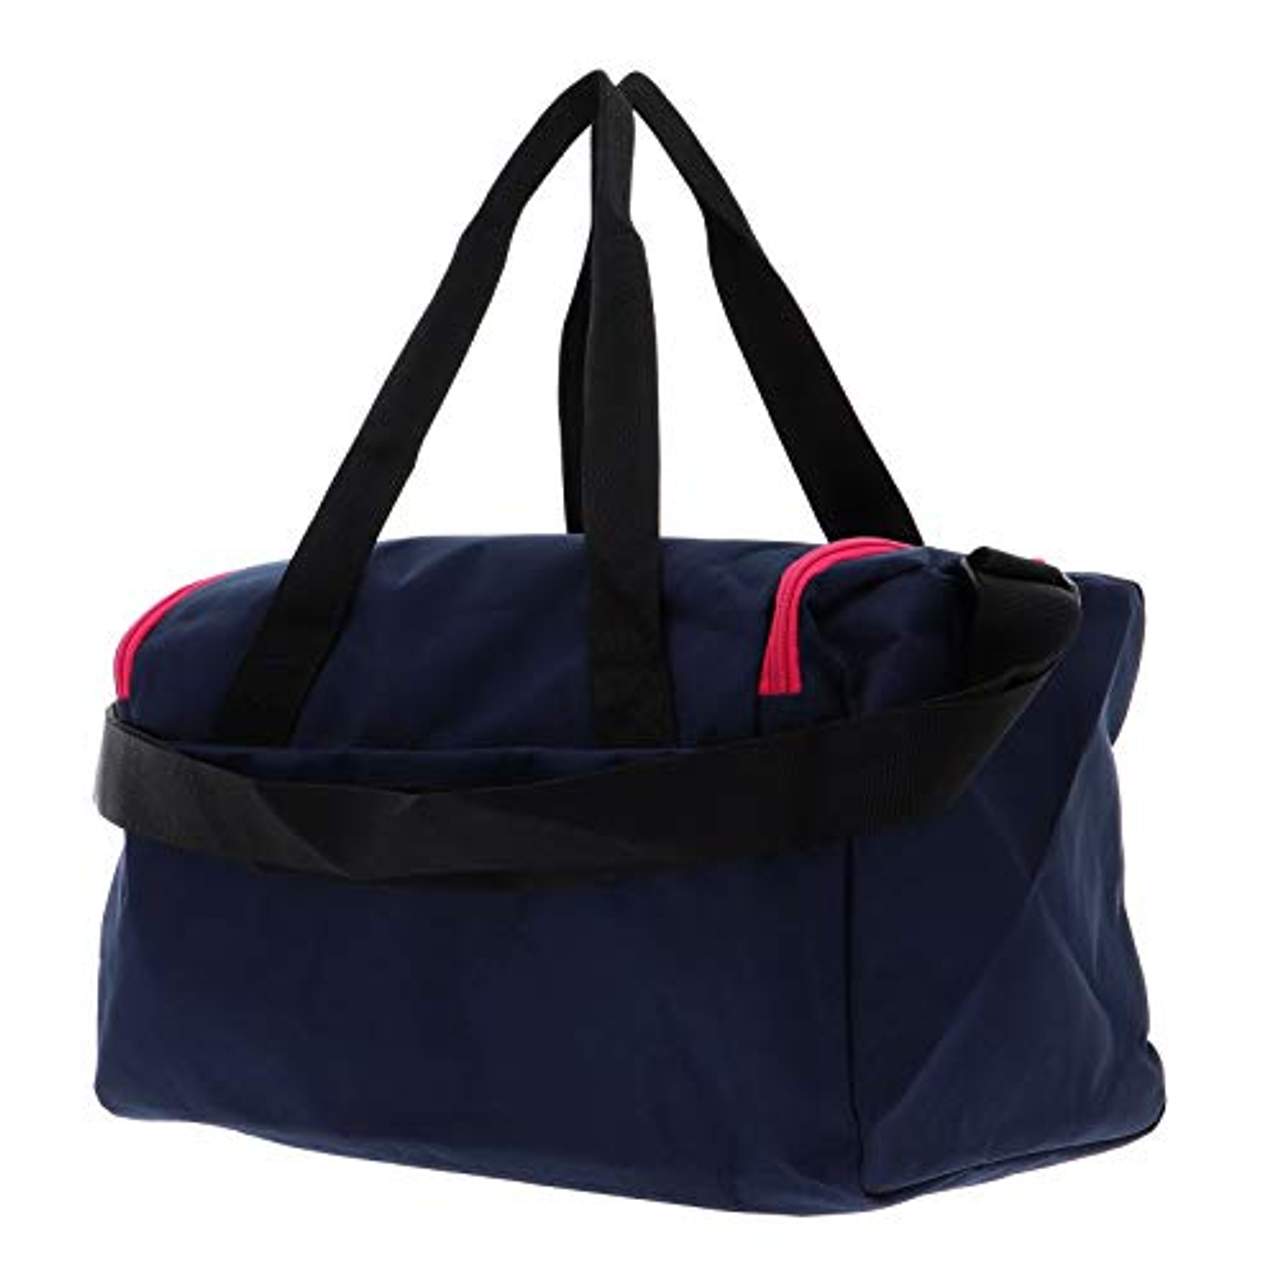 PUMA Fundamentals Sportsbag XS II Tasche